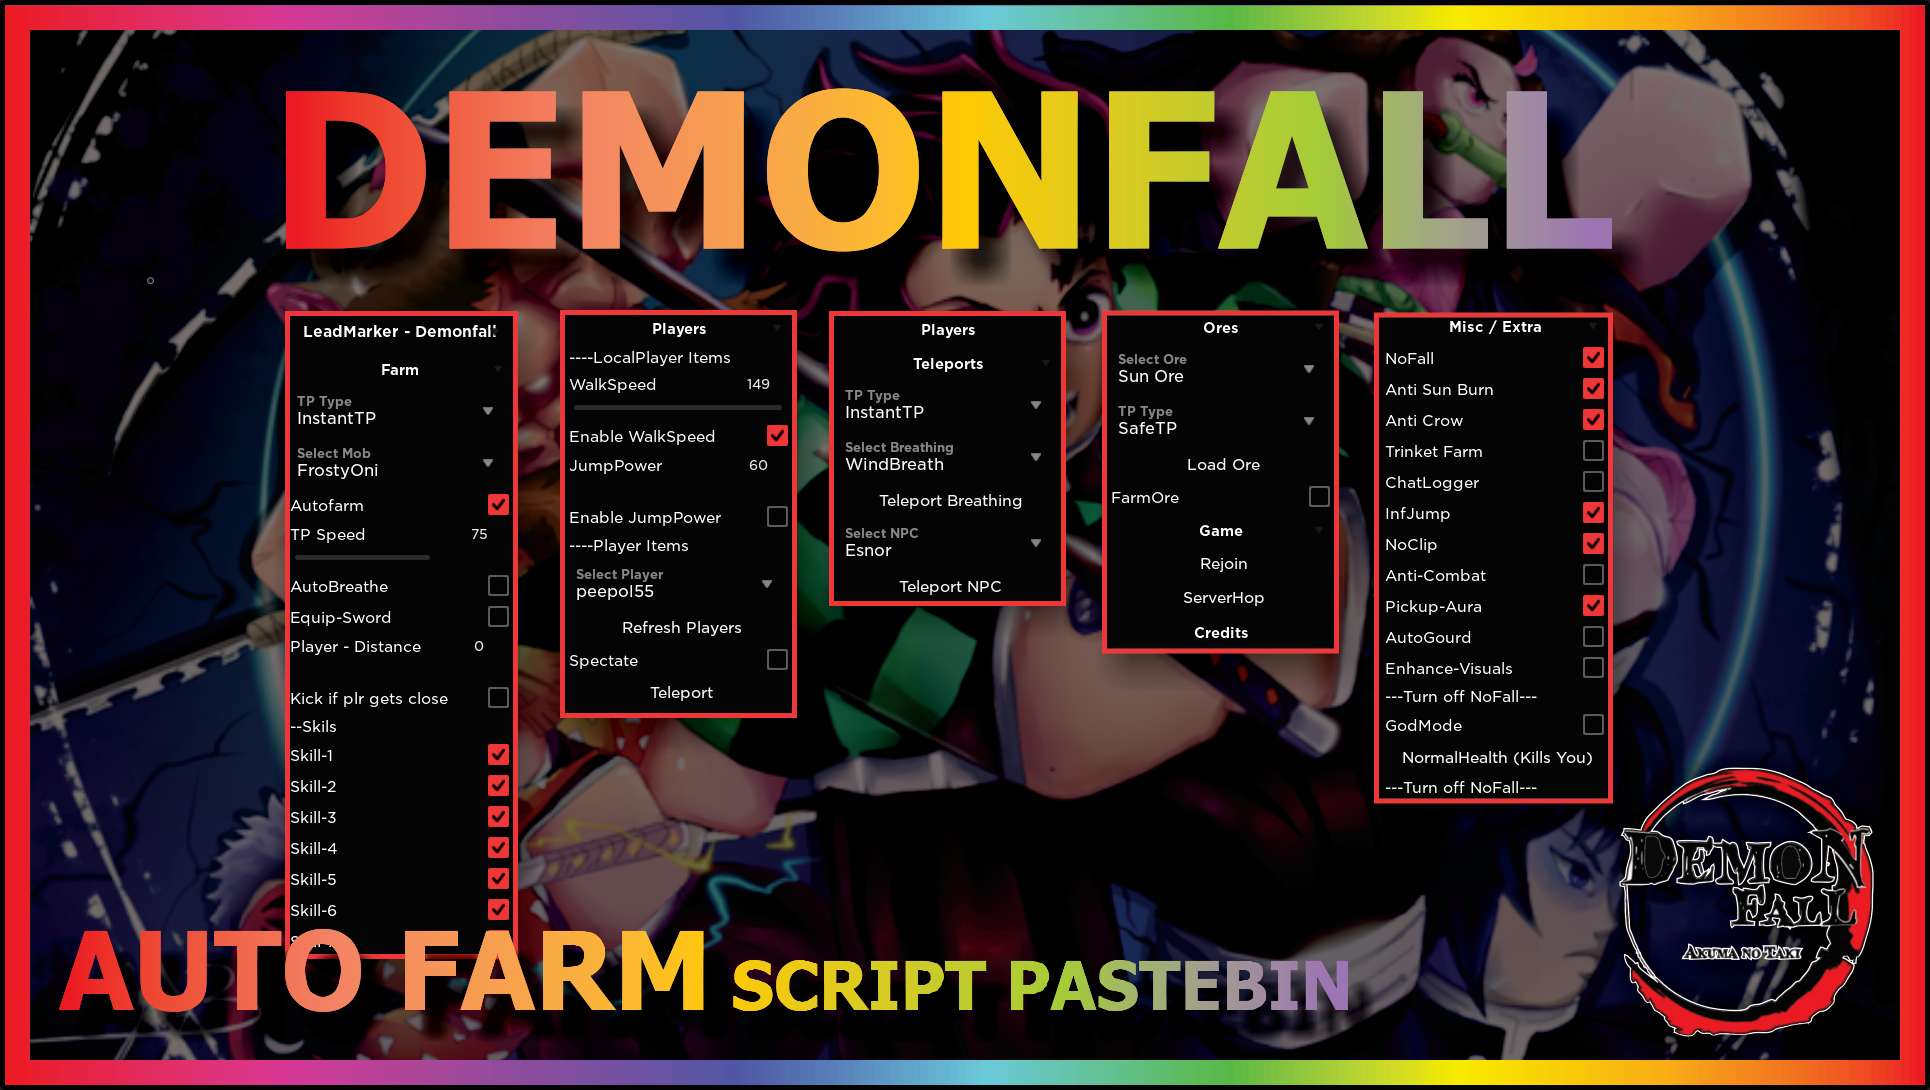 Demonfall [Ore Farm, Trinket Farm] Scripts